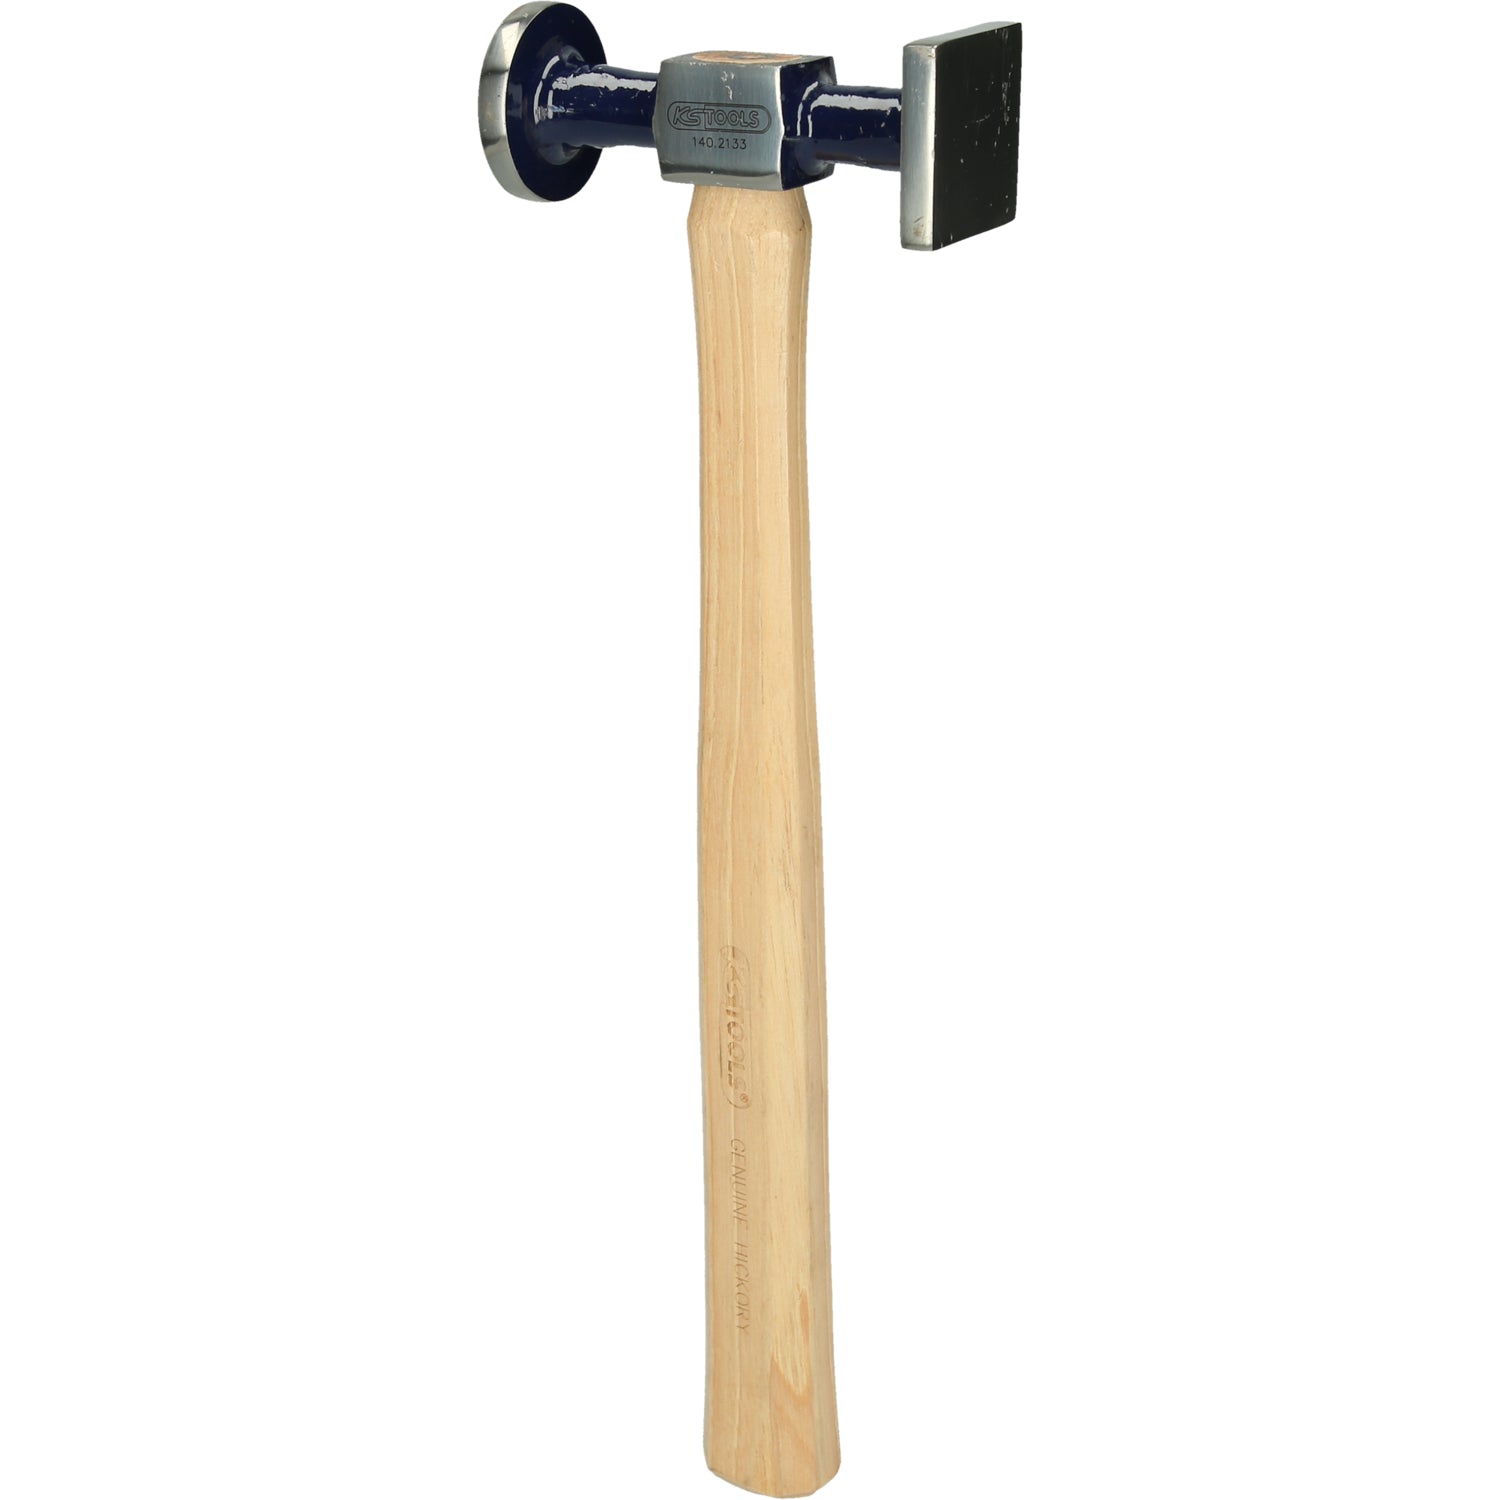 Karosserie-Standard-Hammer, groß rund/eckig, 325mm